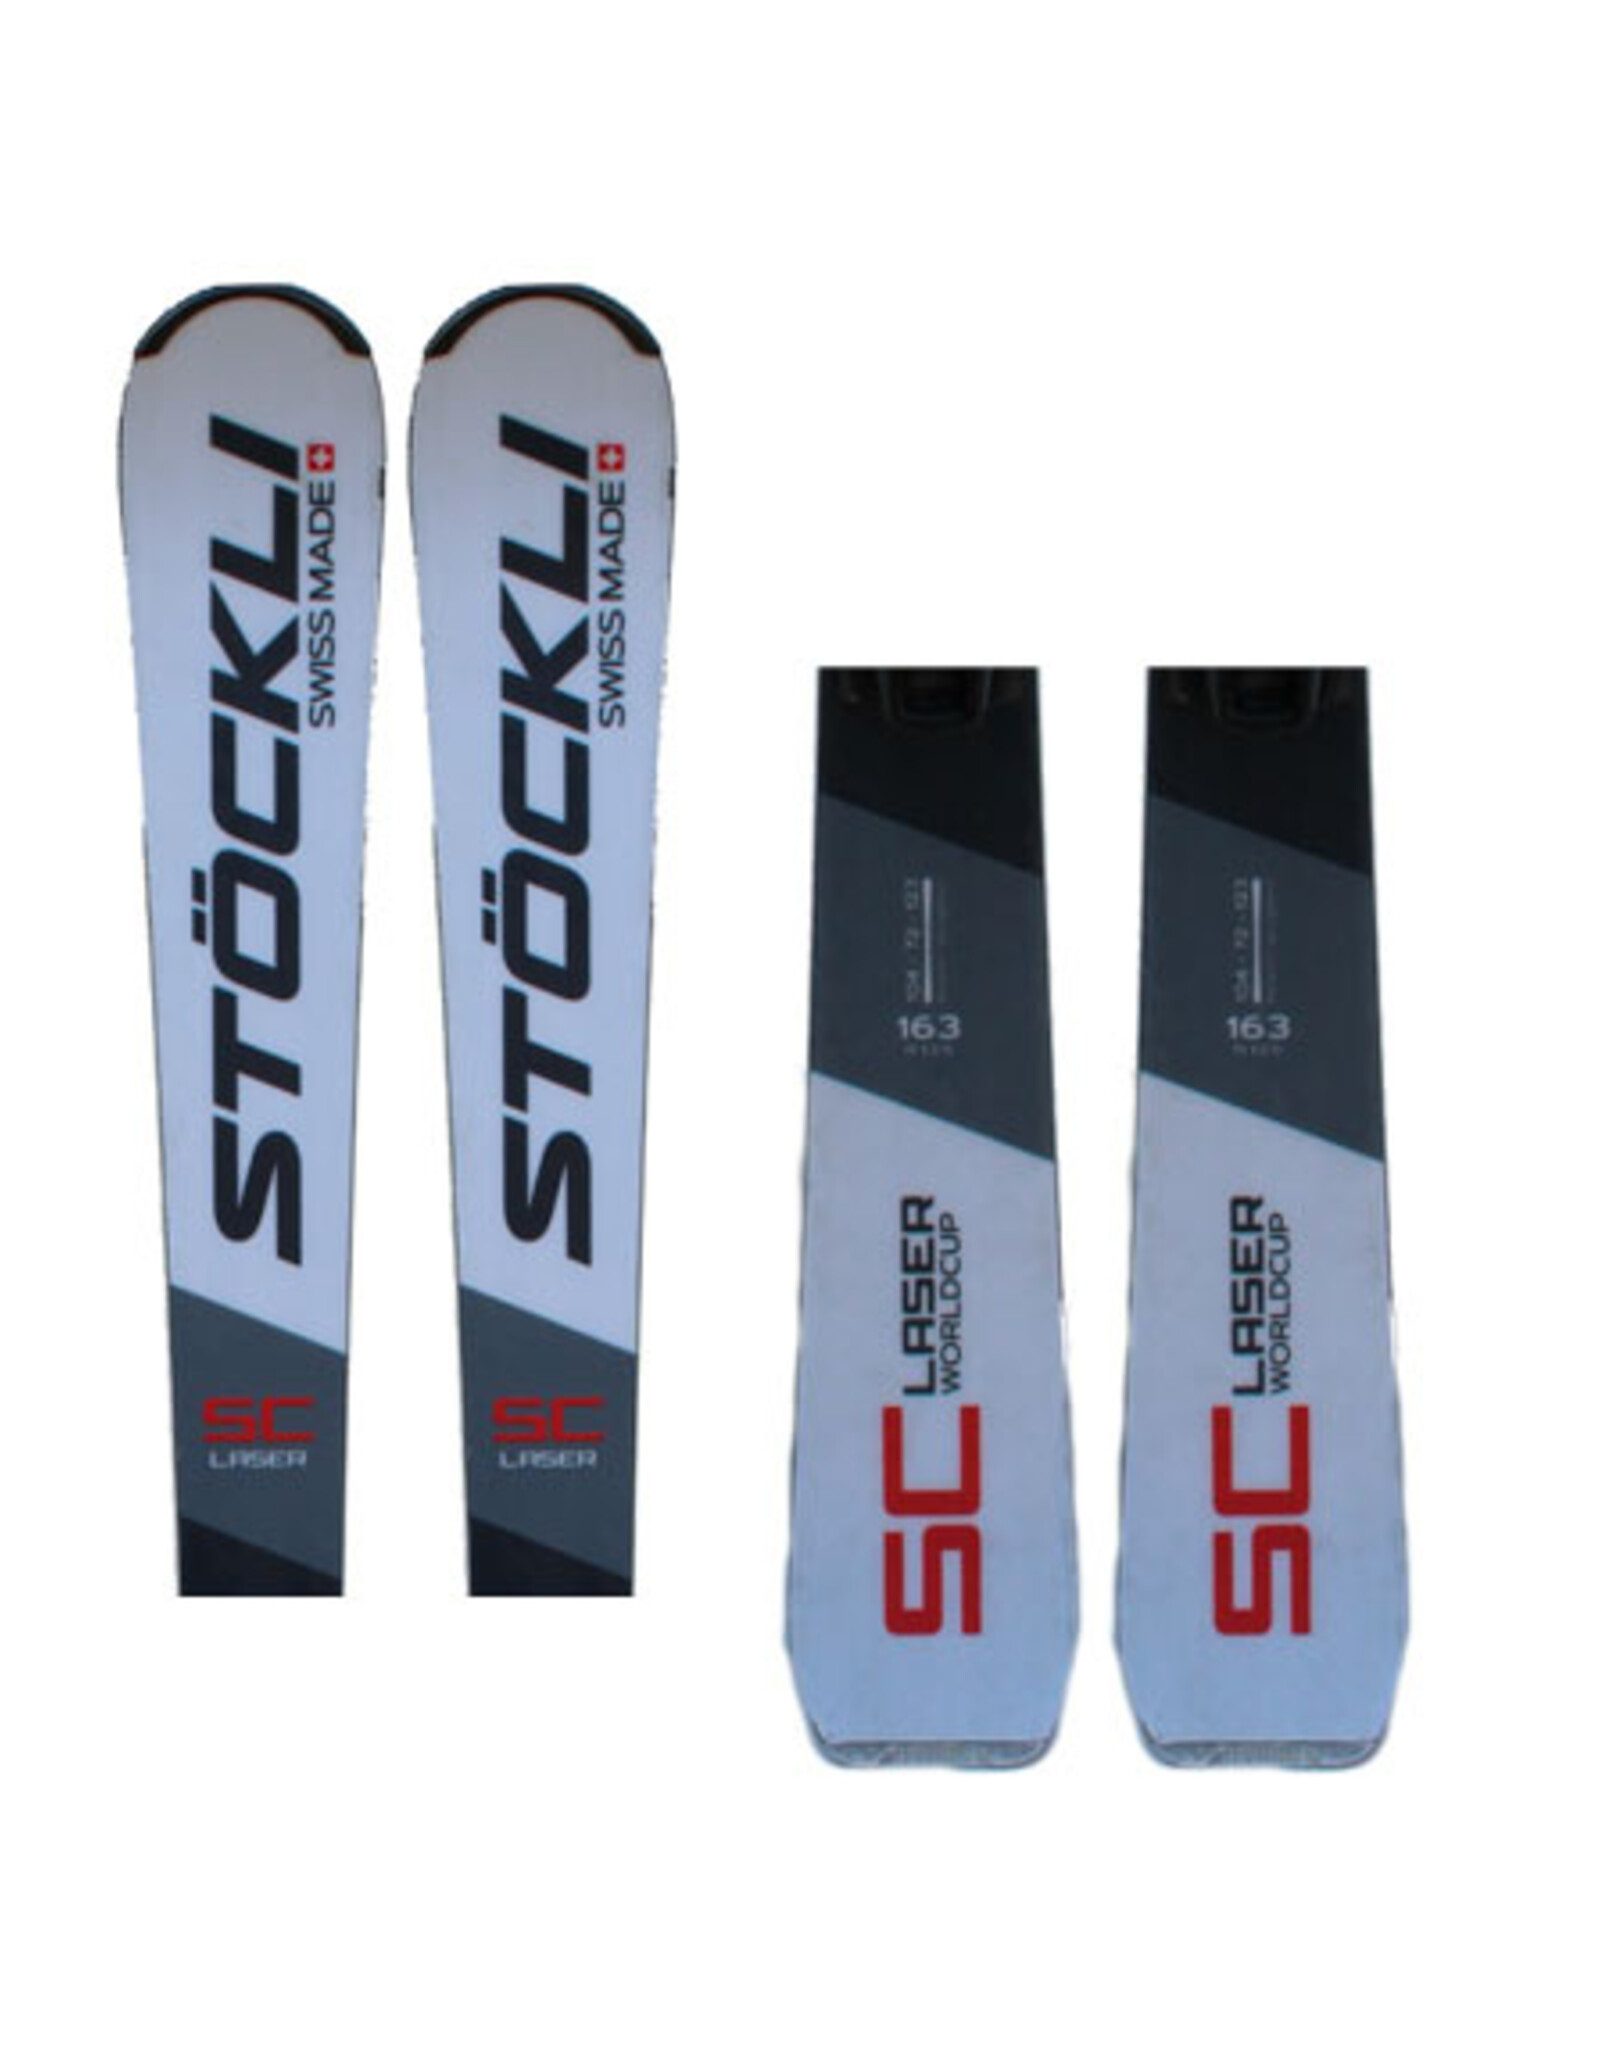 STOCKLI Stockli SC Laser (N) Ski's Gebruikt  (Zwart/Wit)